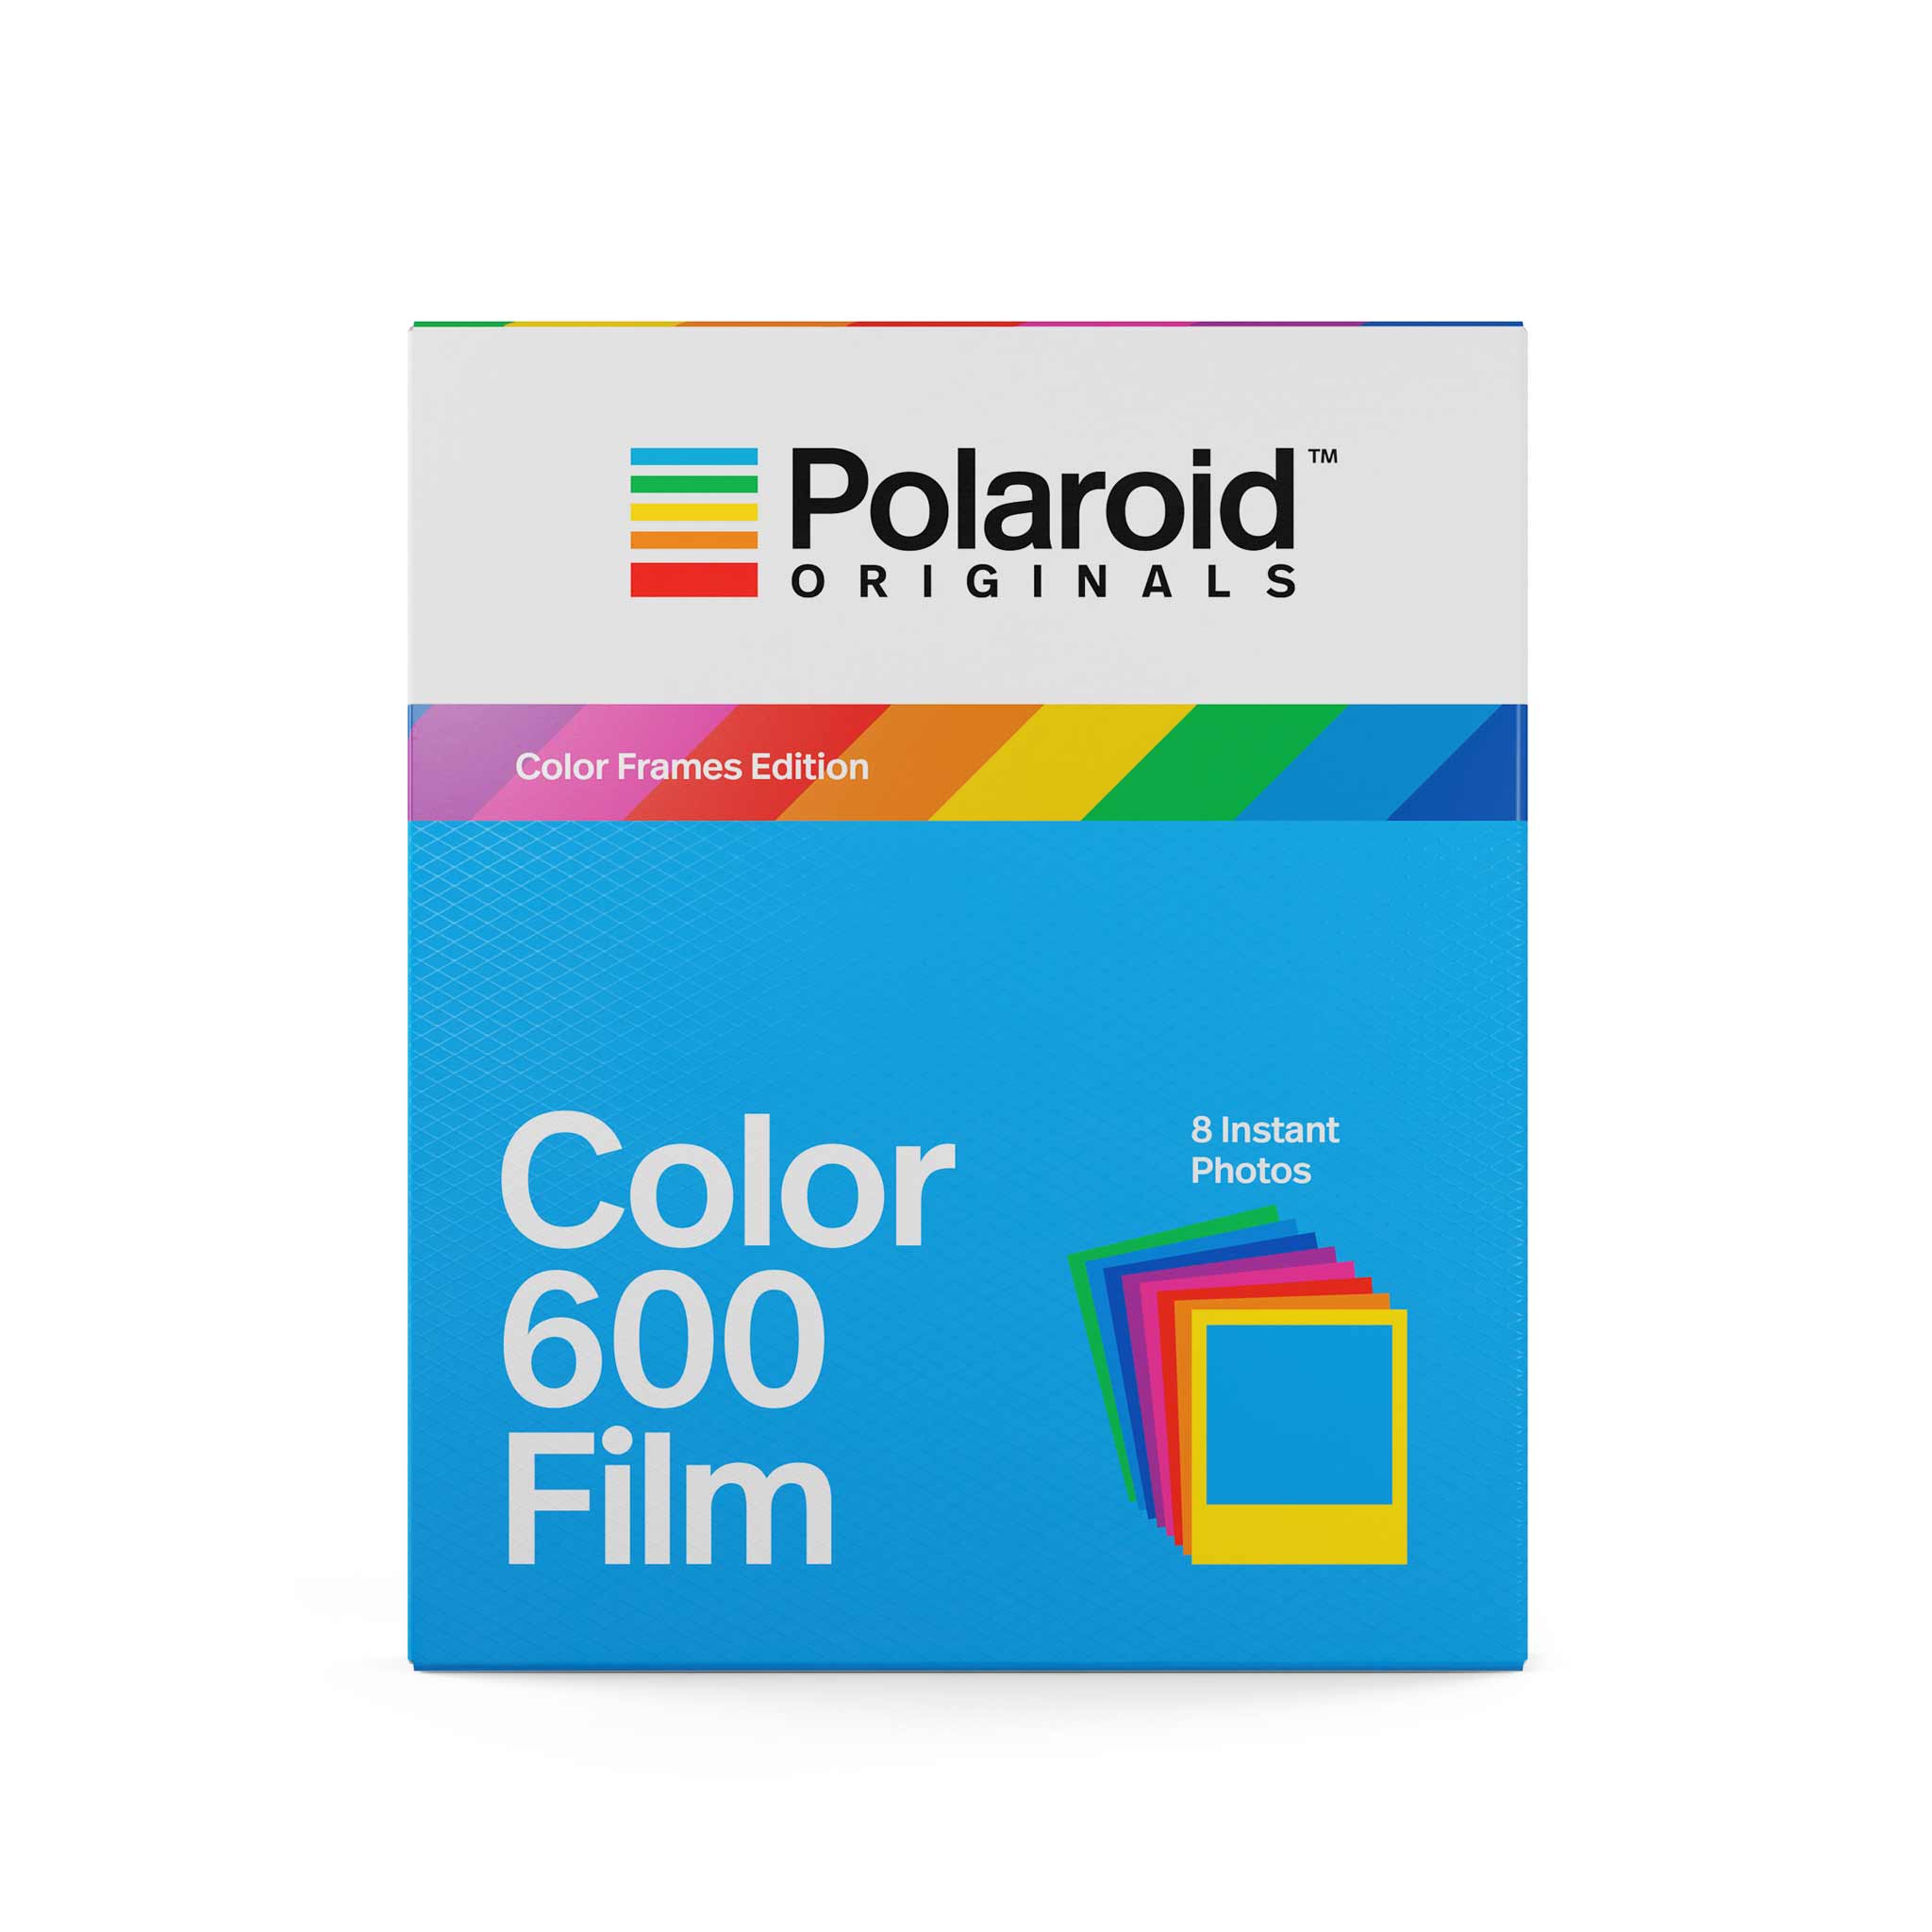 Polaroid Color 600 Film Color Frames (6015)